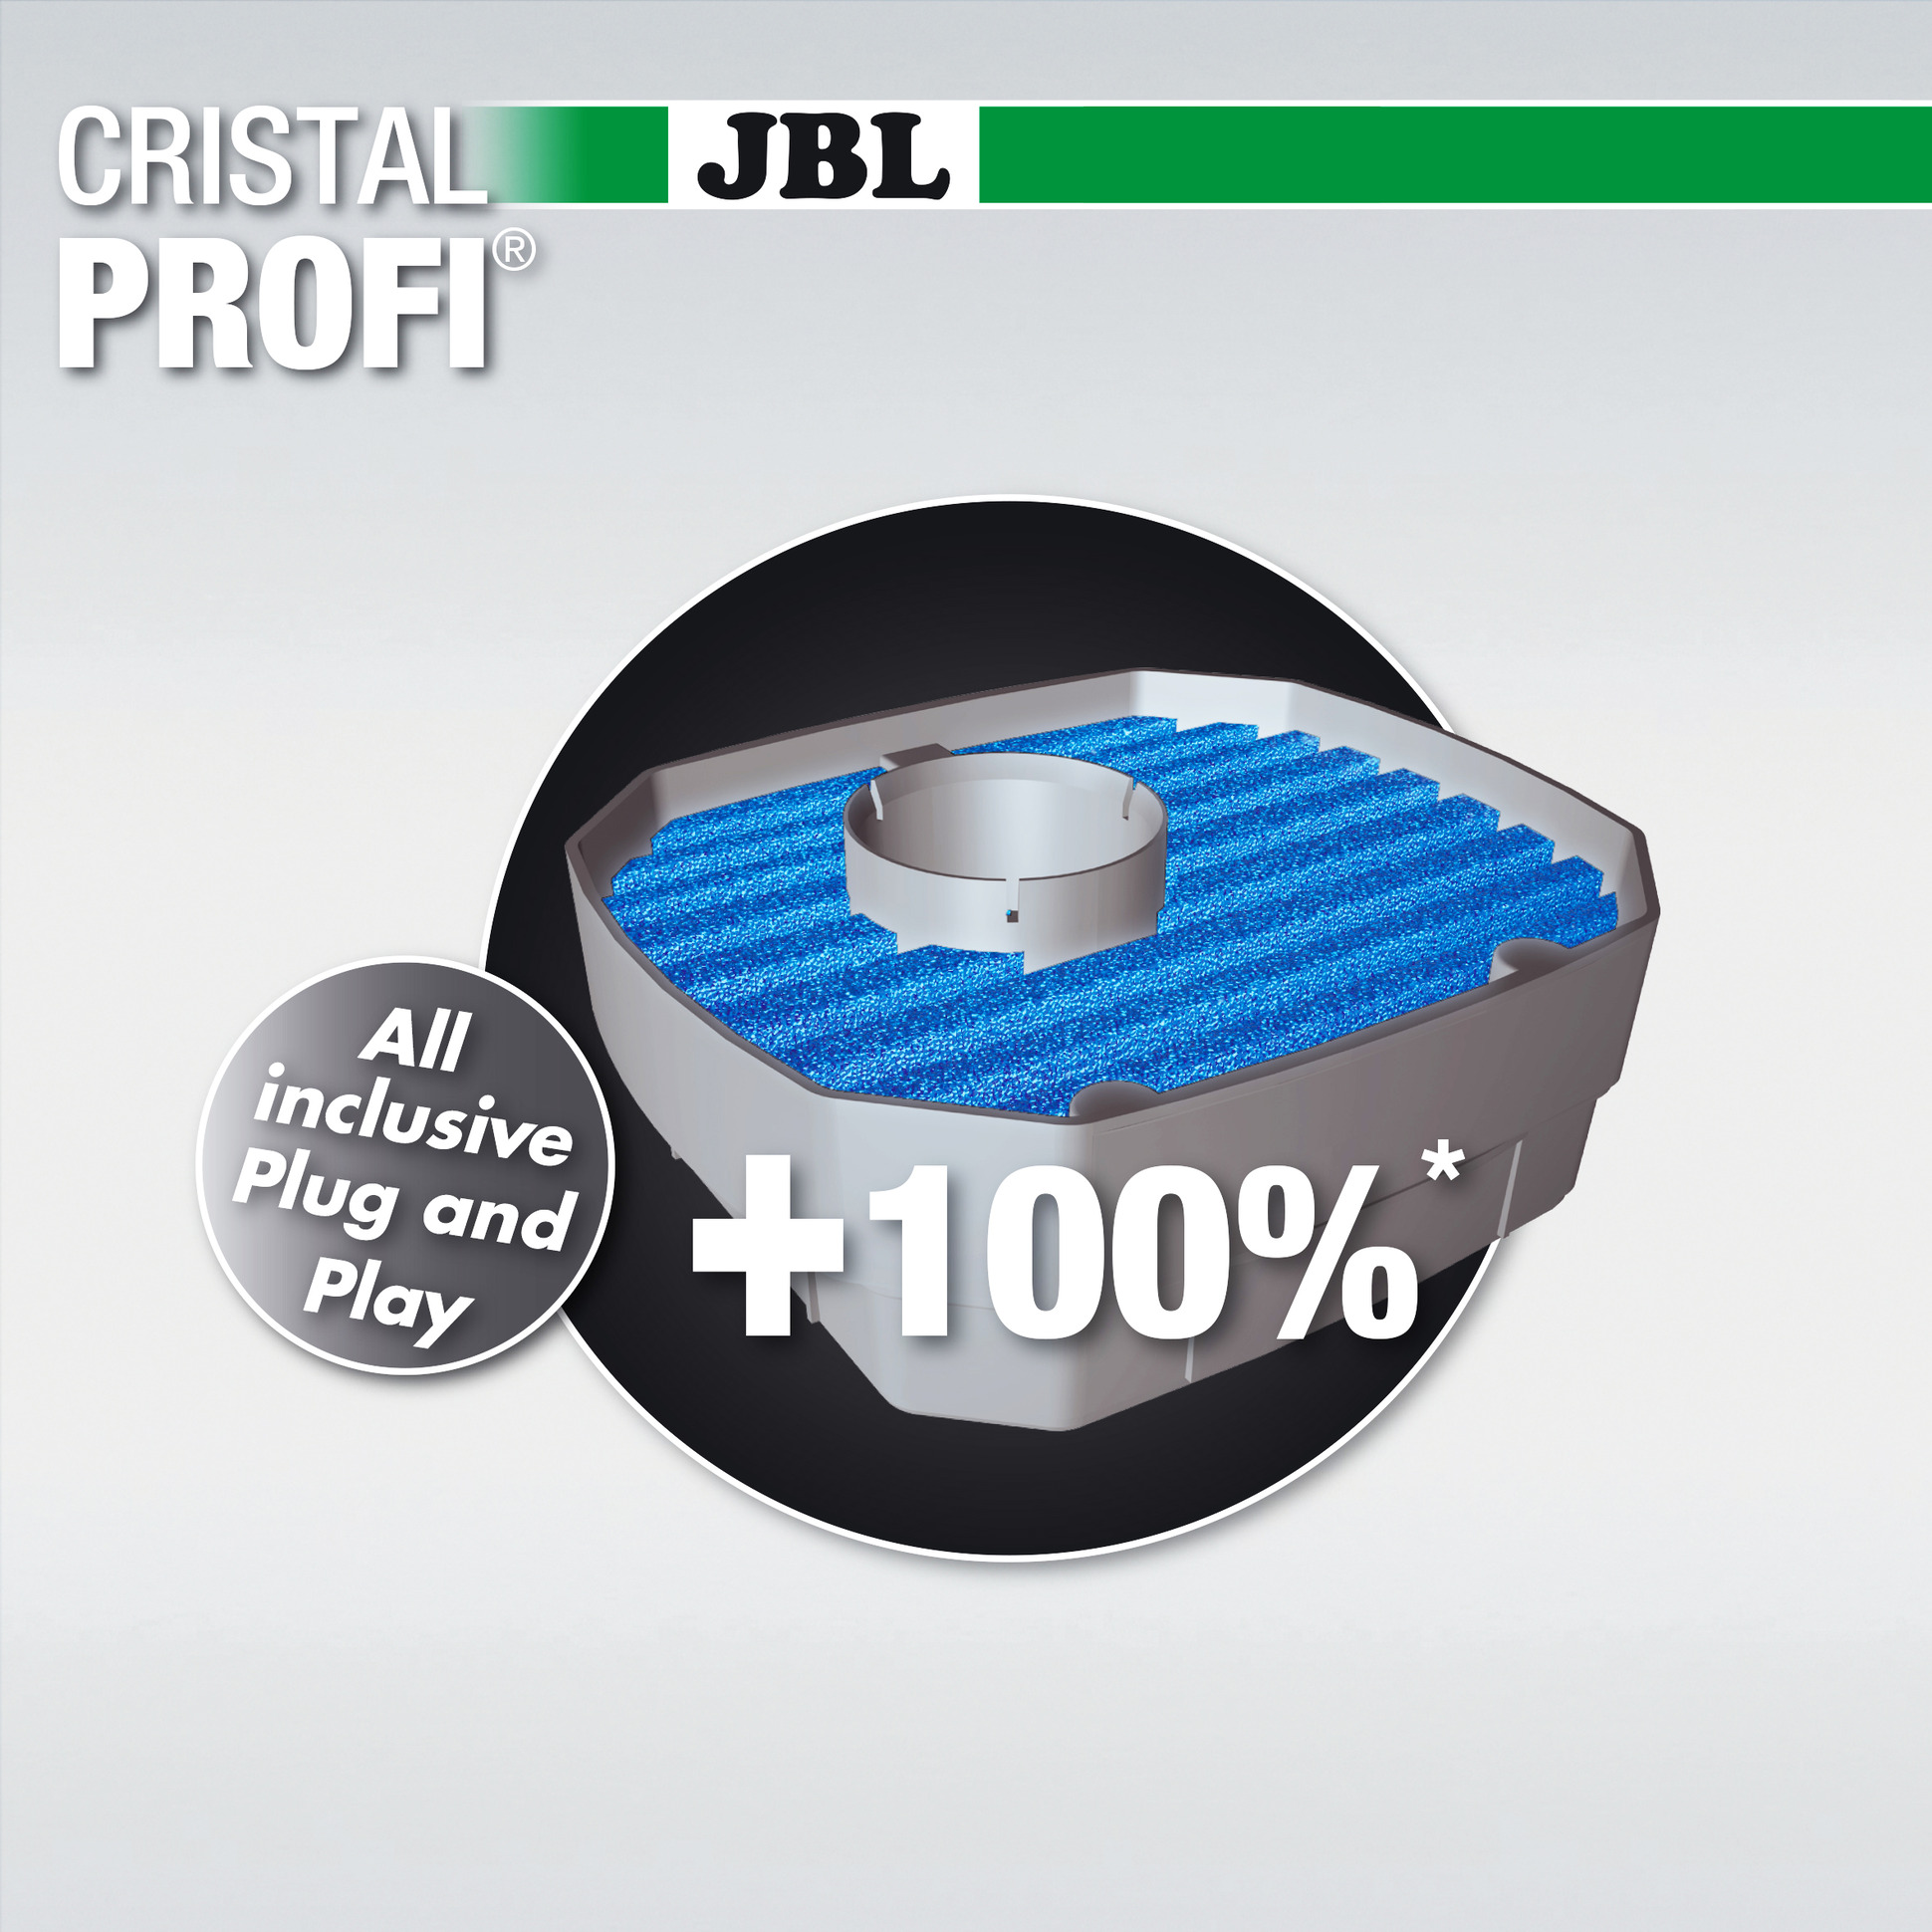 Внешний фильтр для аквариума JBL CristalProfi e402 greenline 52771